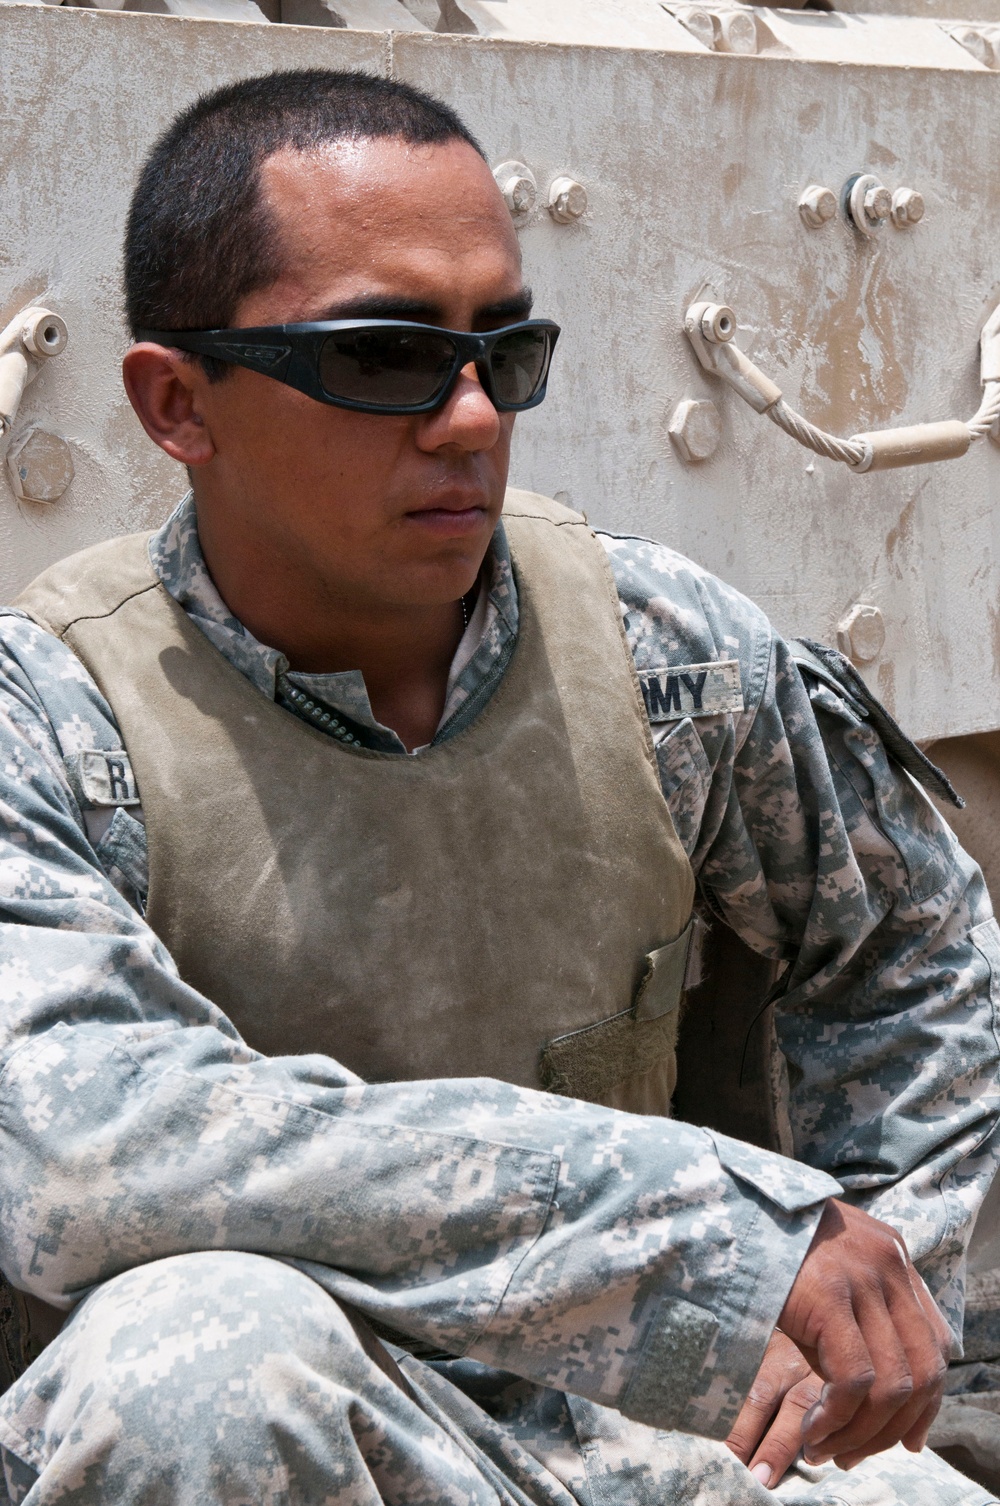 Infantryman serves for his family